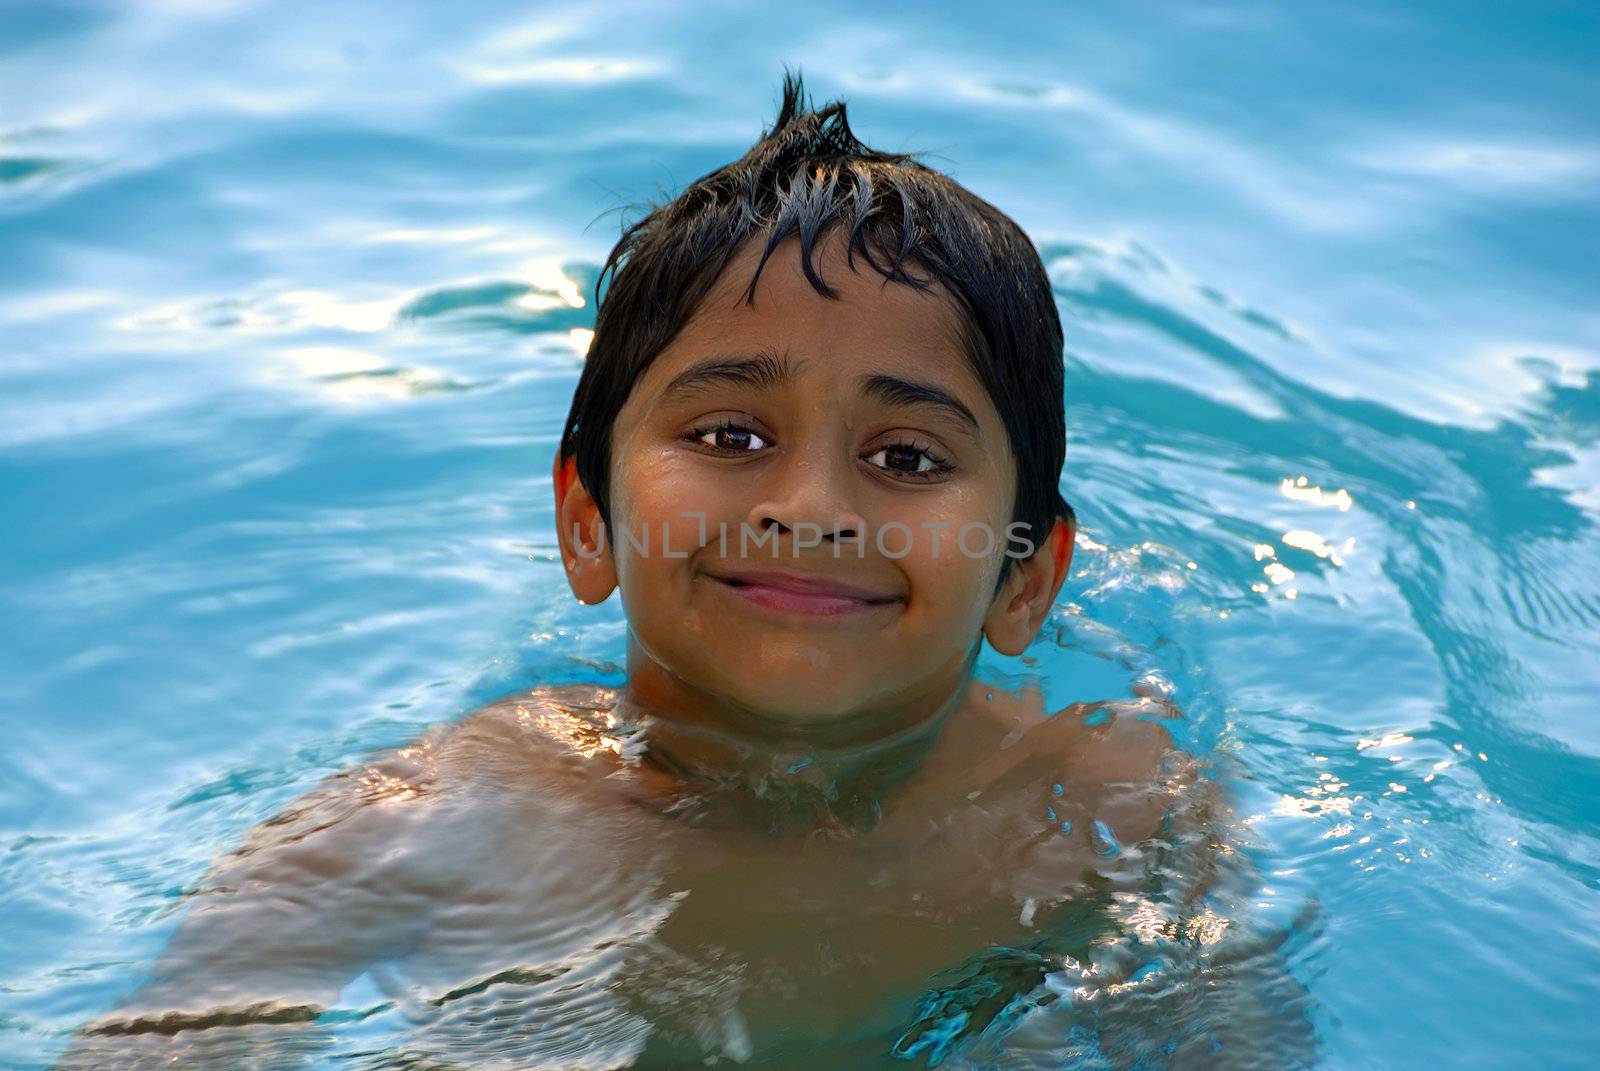 An young indian boy having fun swimming in the pool

